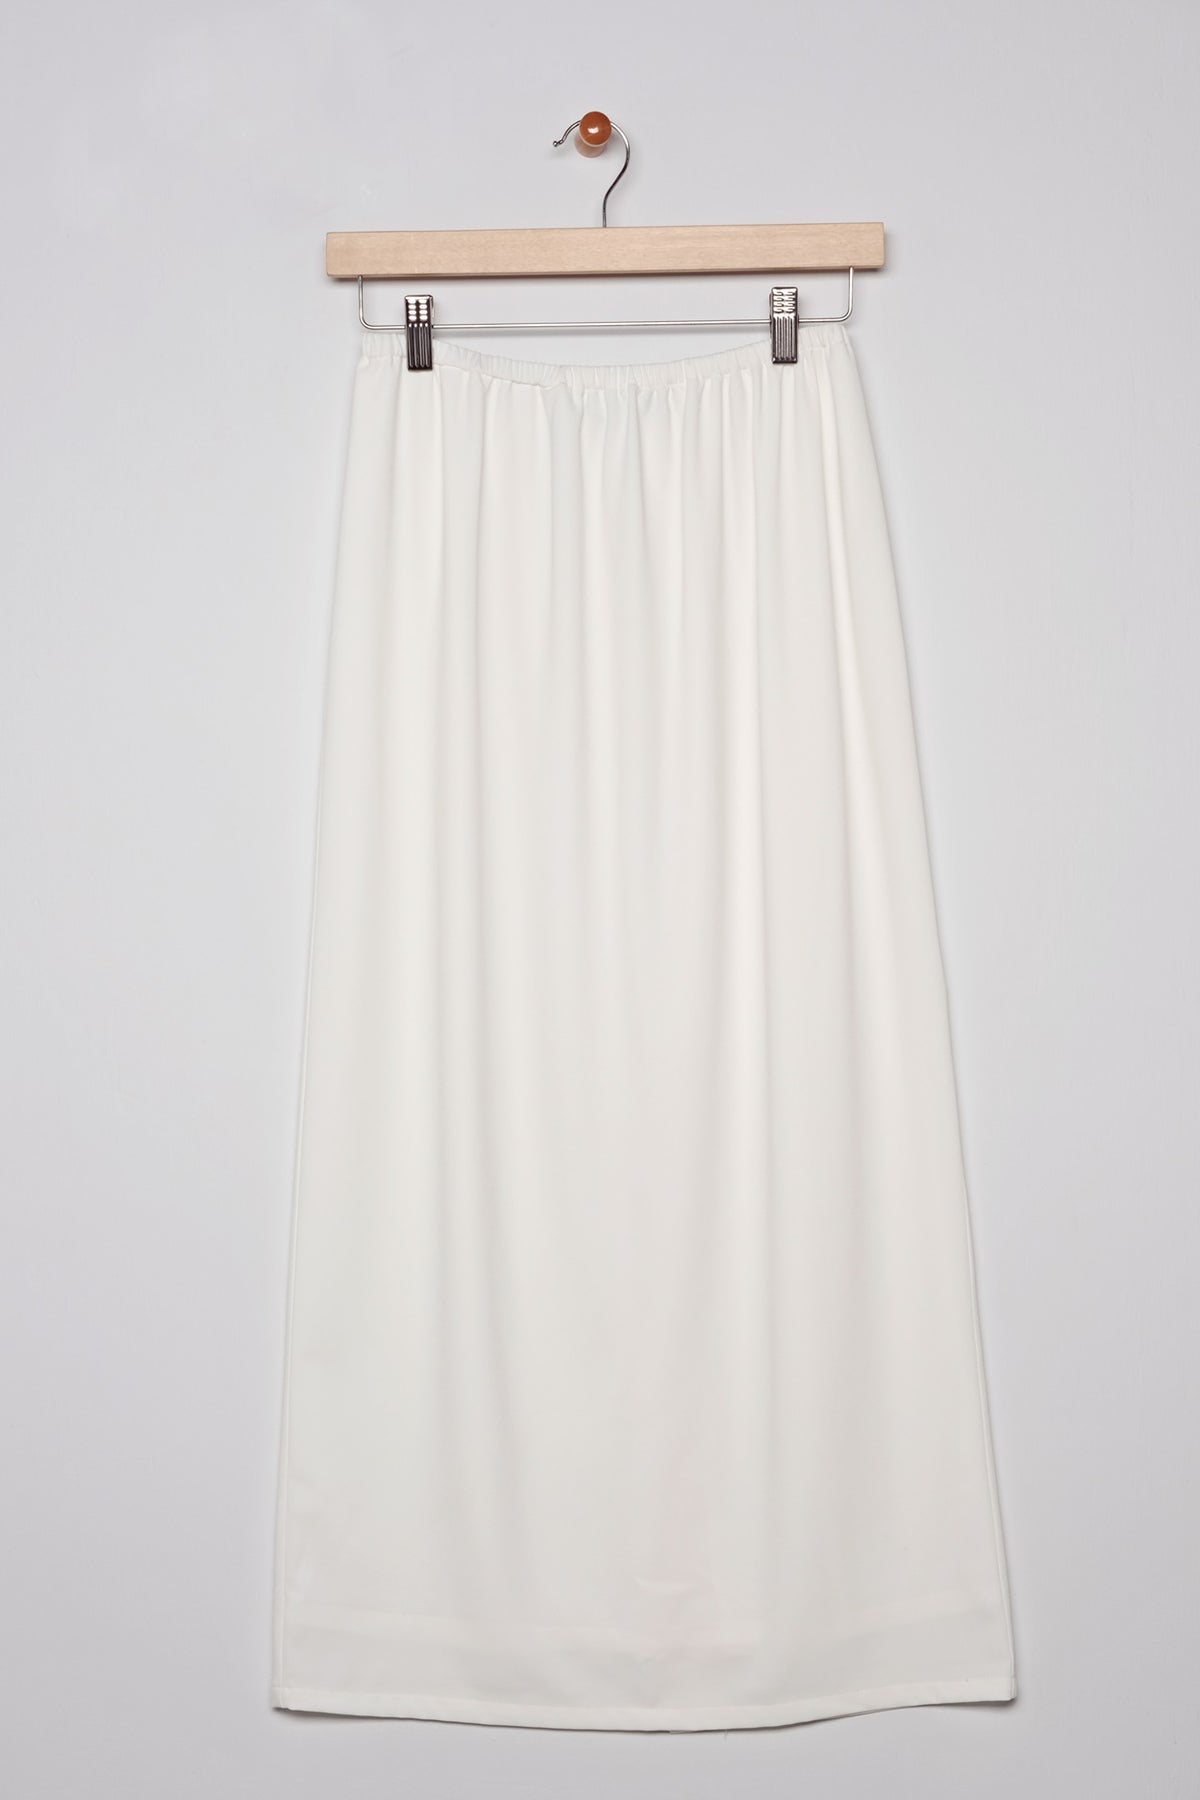 34" Crepe Skirt with Back Slit New Orleans Wovens